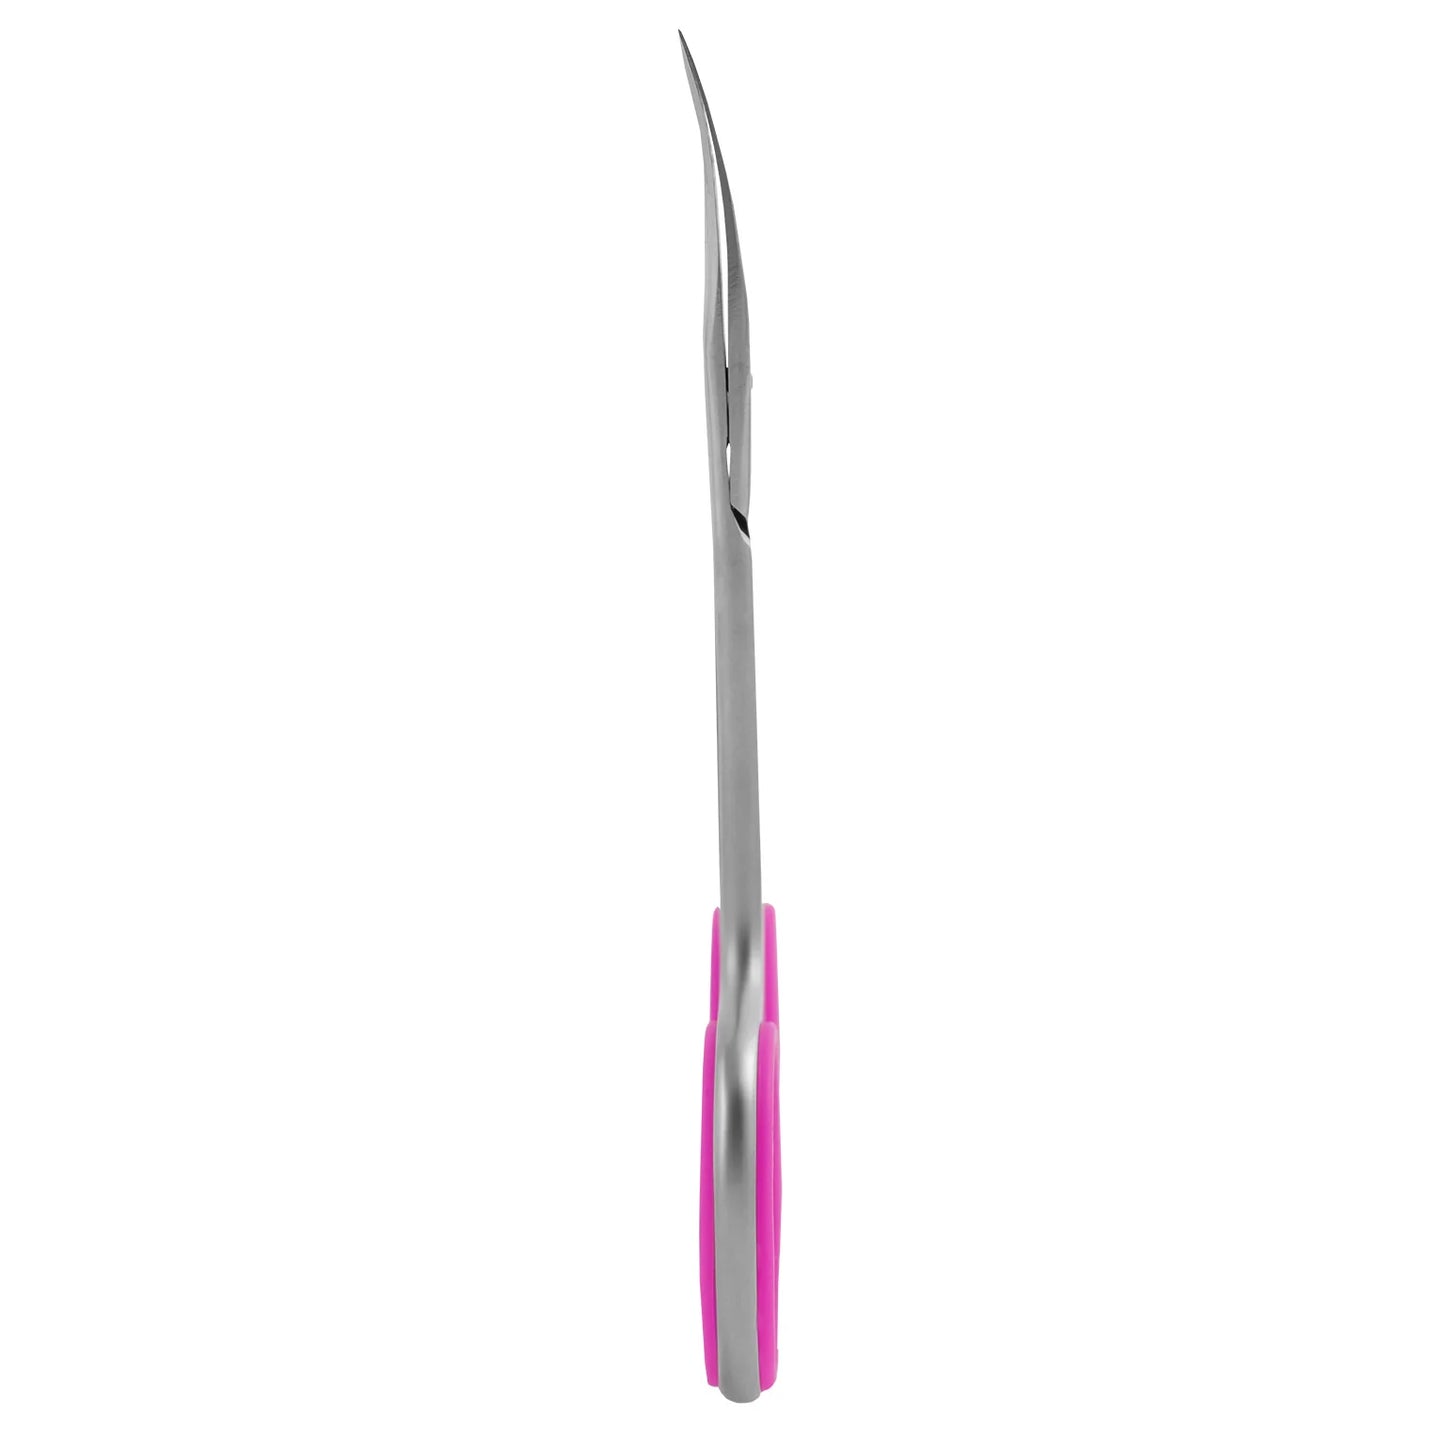 Professional cuticle scissors SMART 40 TYPE 3 -SS-40/3